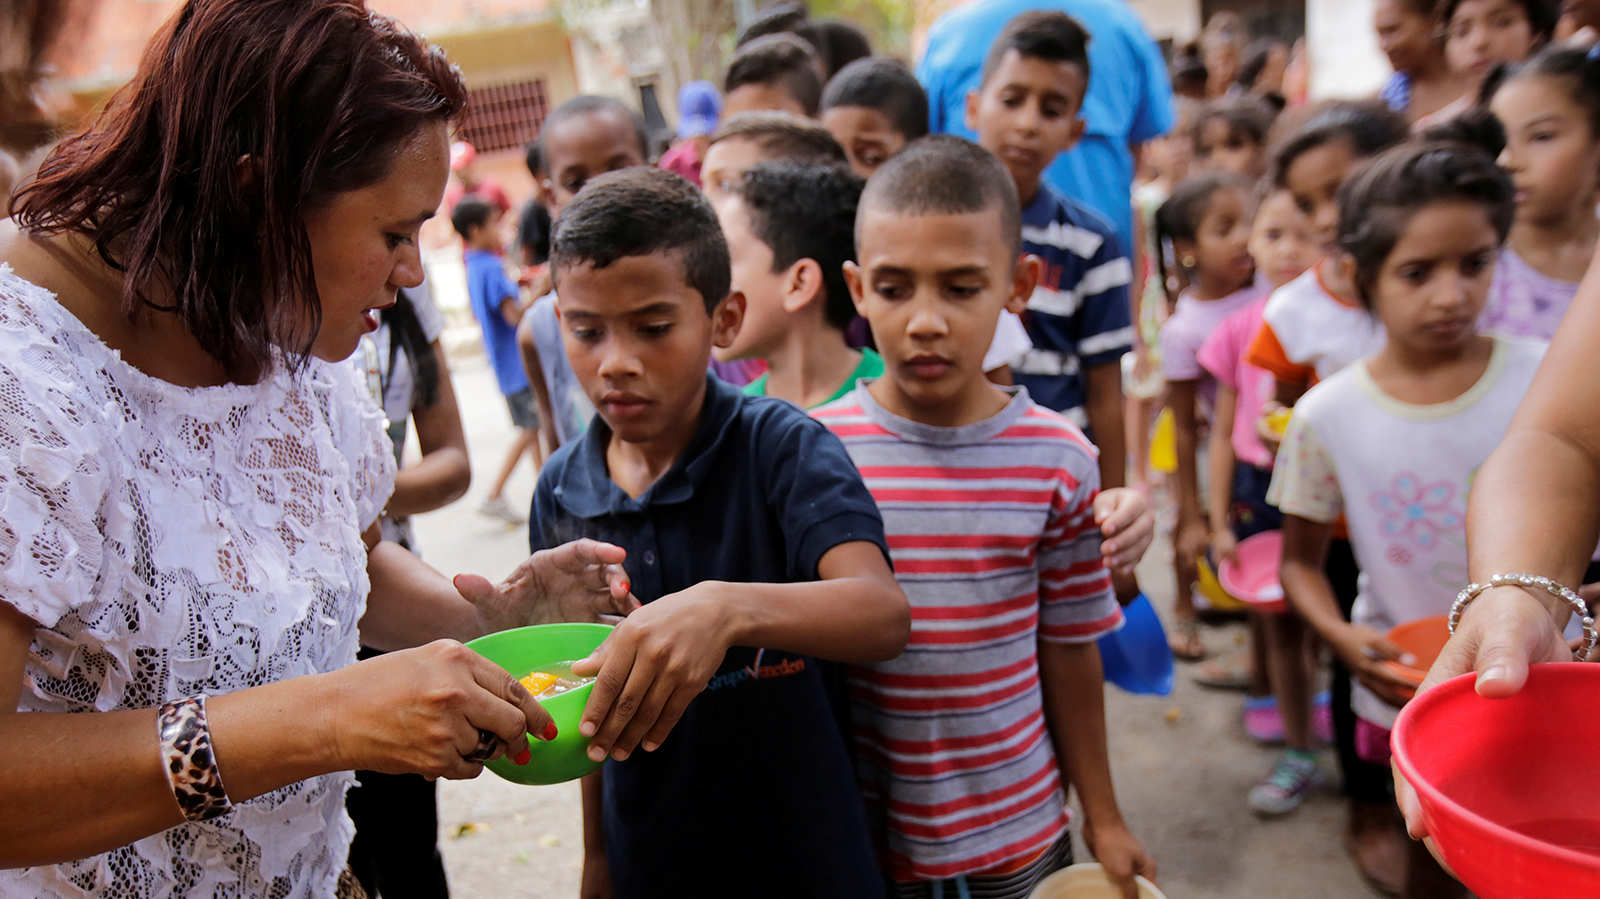 Snapshots Across the Globe: Feeding Venezuela’s children